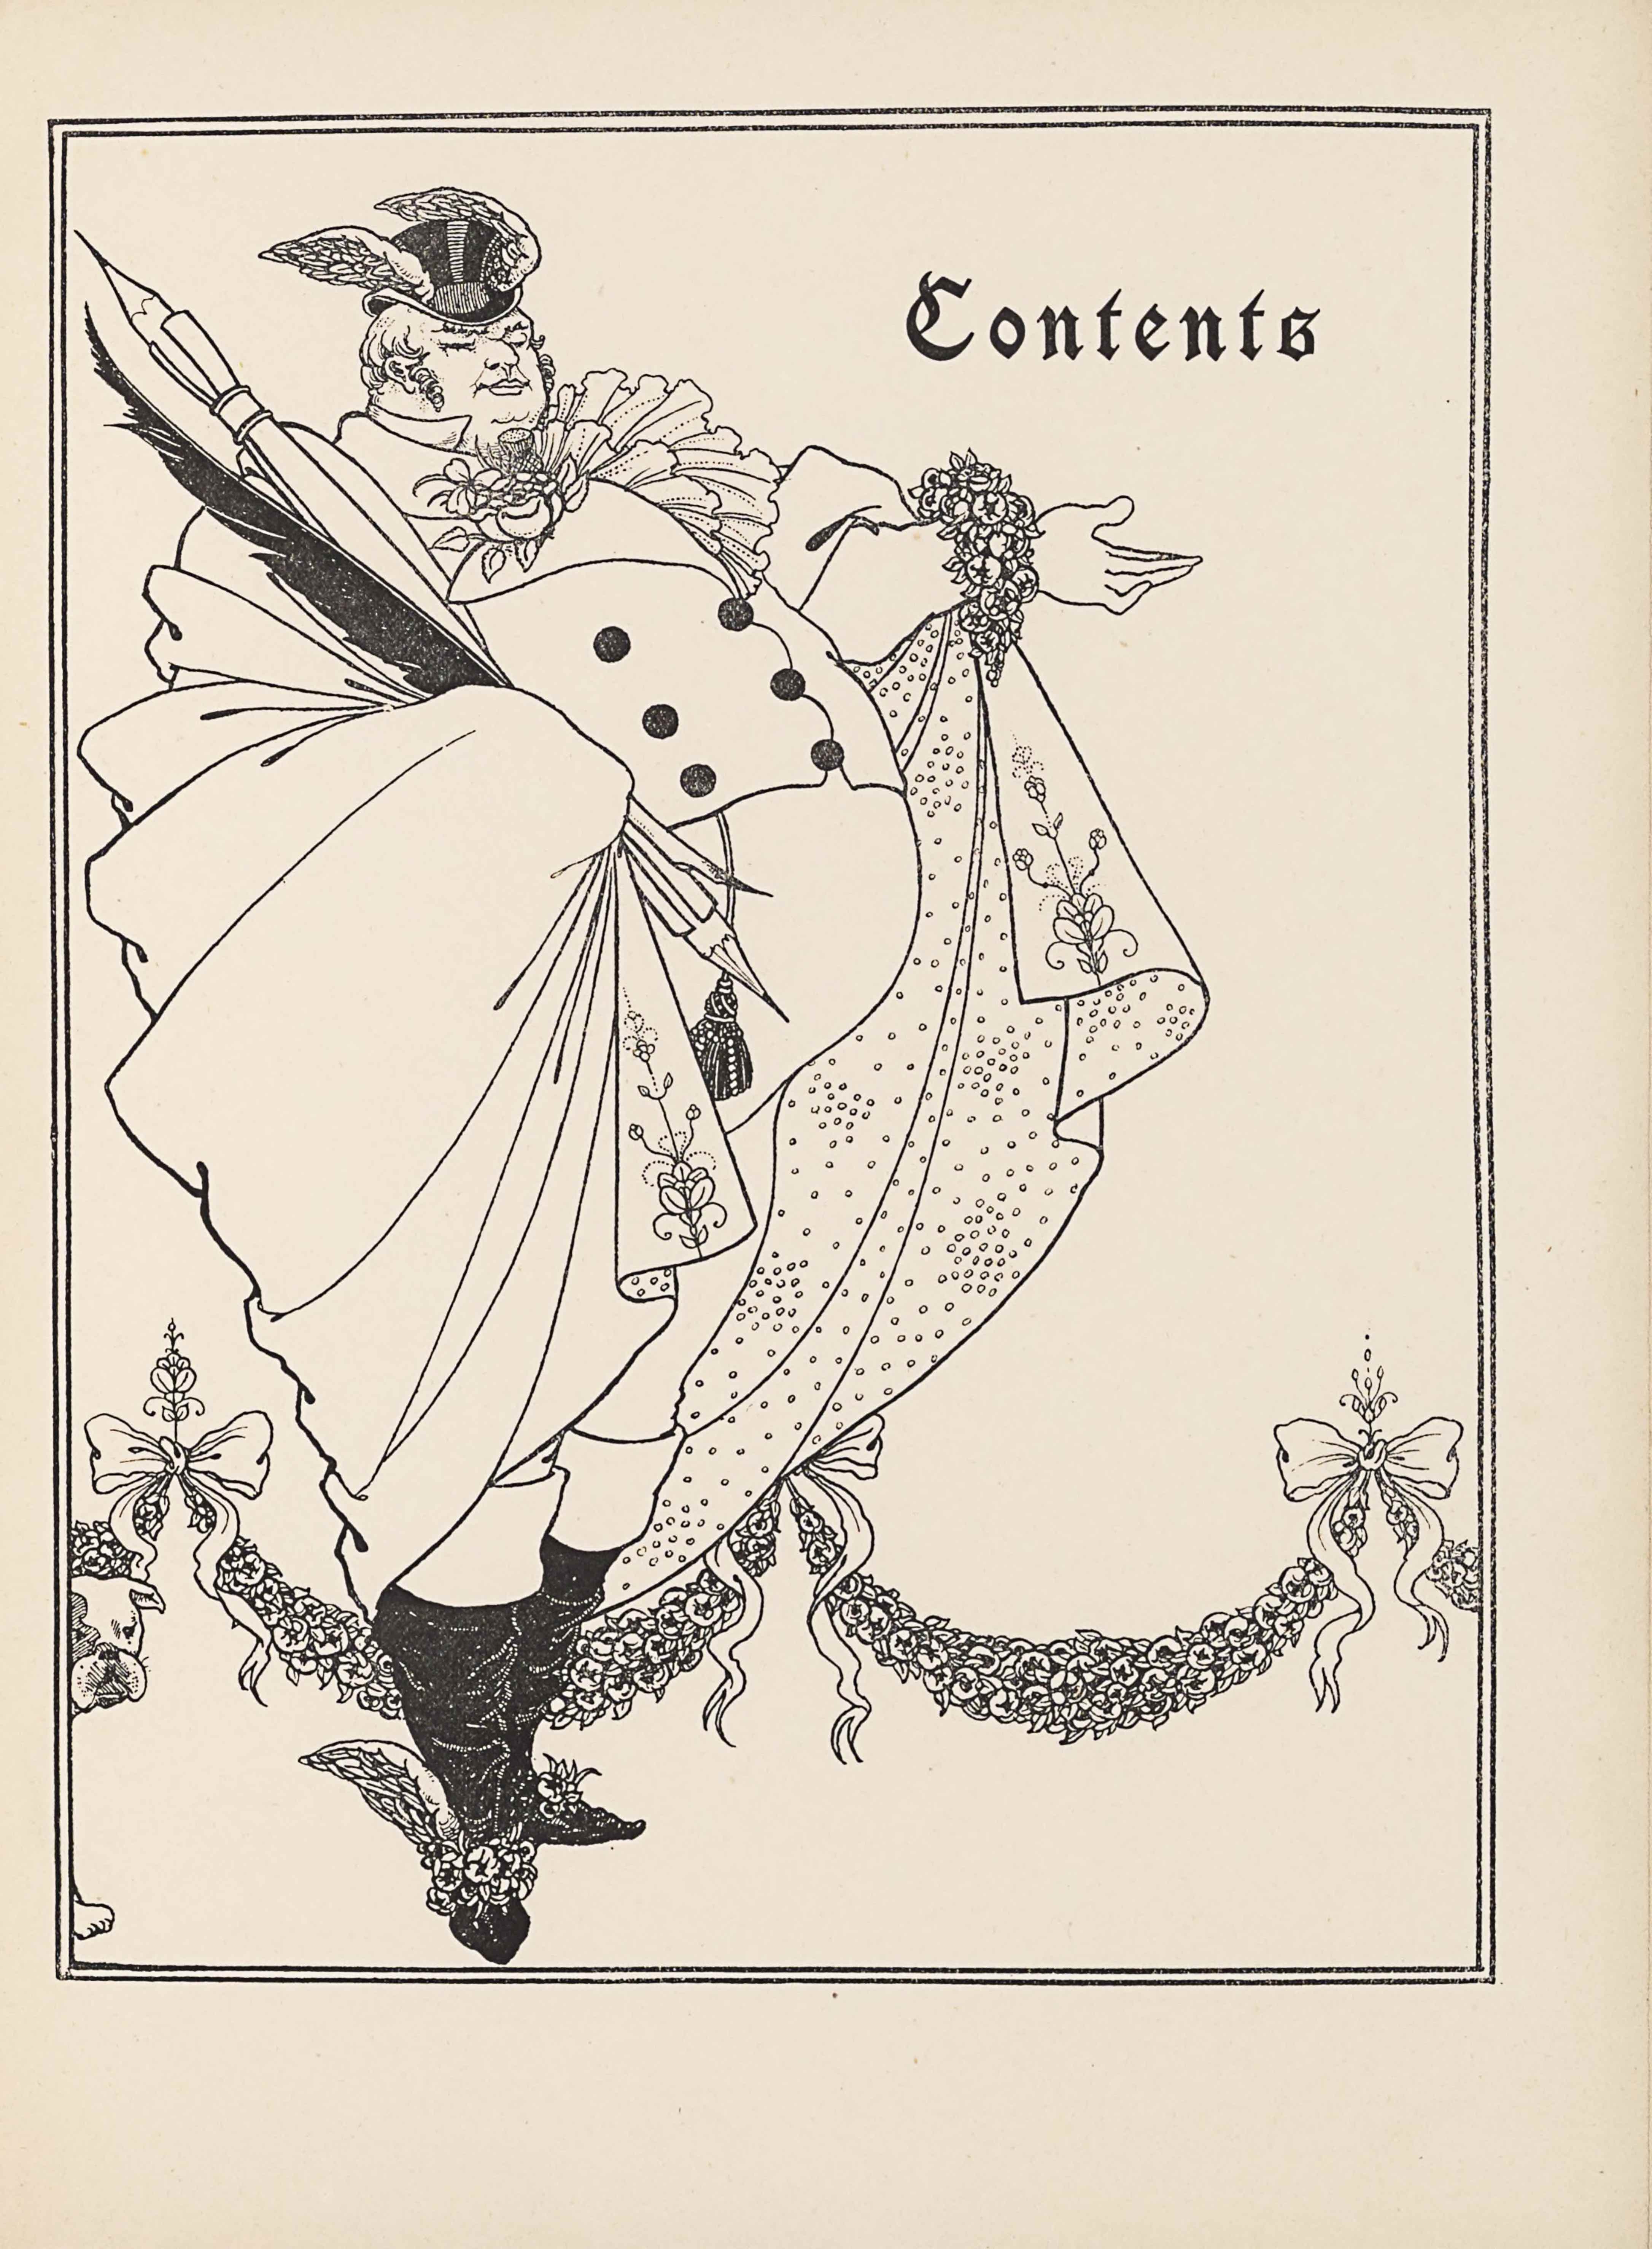 Figure 2. Aubrey Beardsley, Contents page design, The Savoy, vol. 1 (1896)